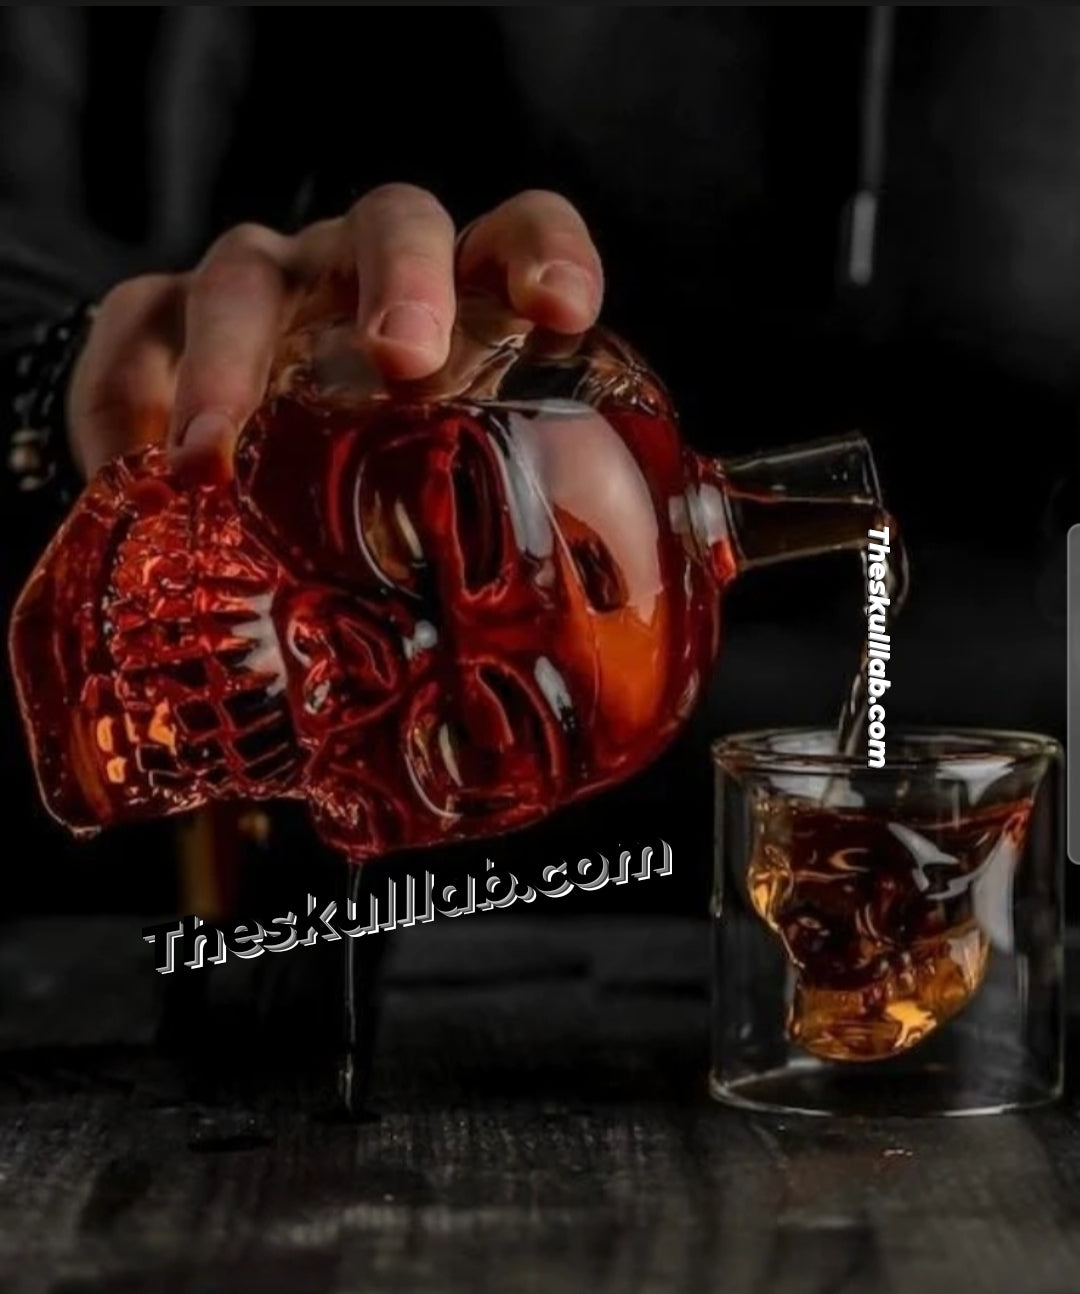 Skull Shot Transparent Glass Decor